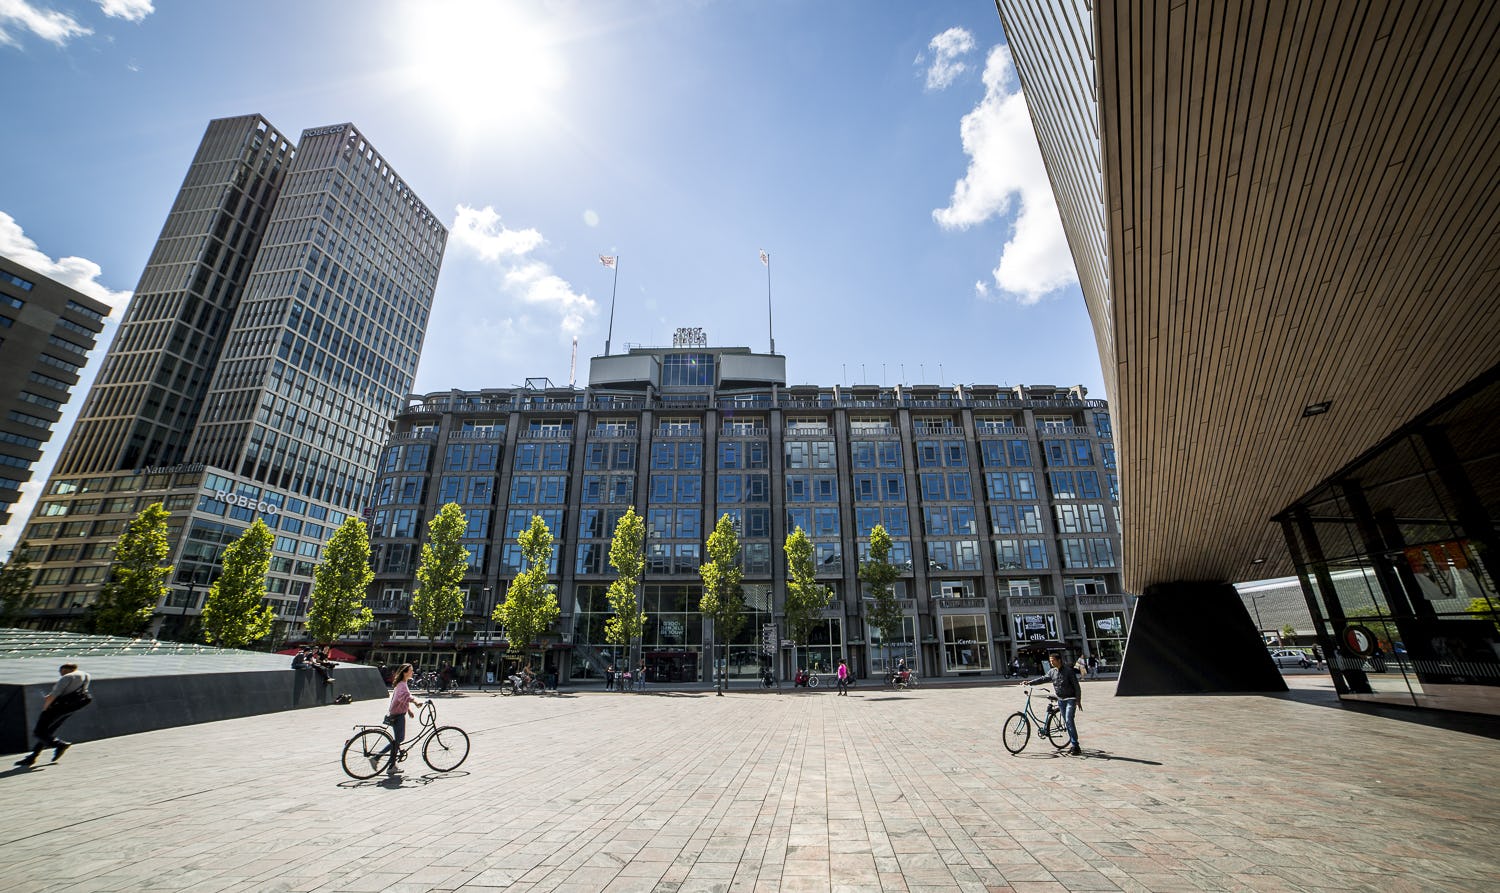 Groothandelsgebouw, Rotterdam